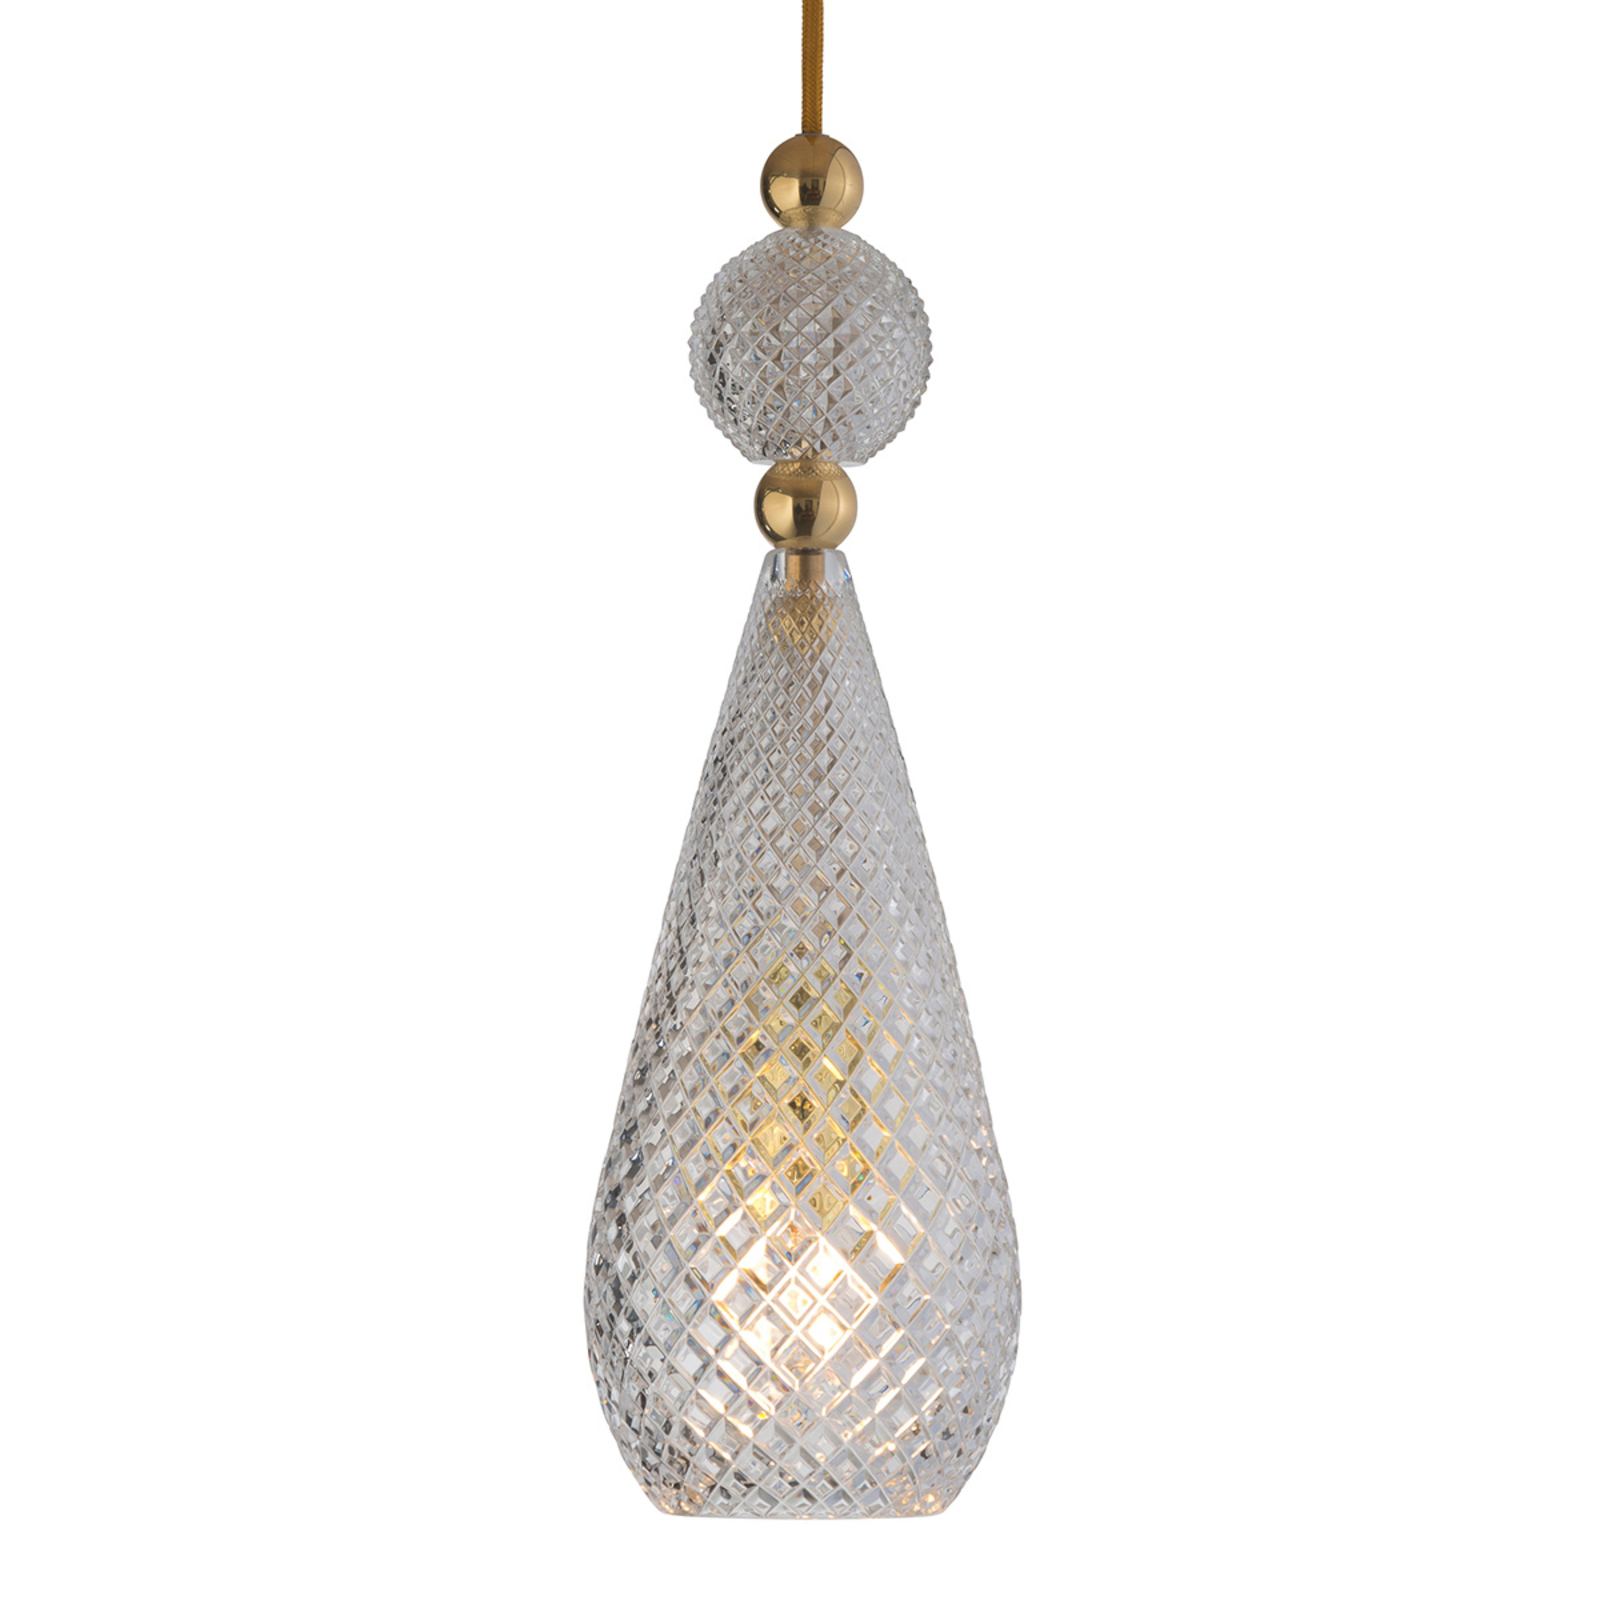 EBB & FLOW Smykke lámpara colgante oro, cristal